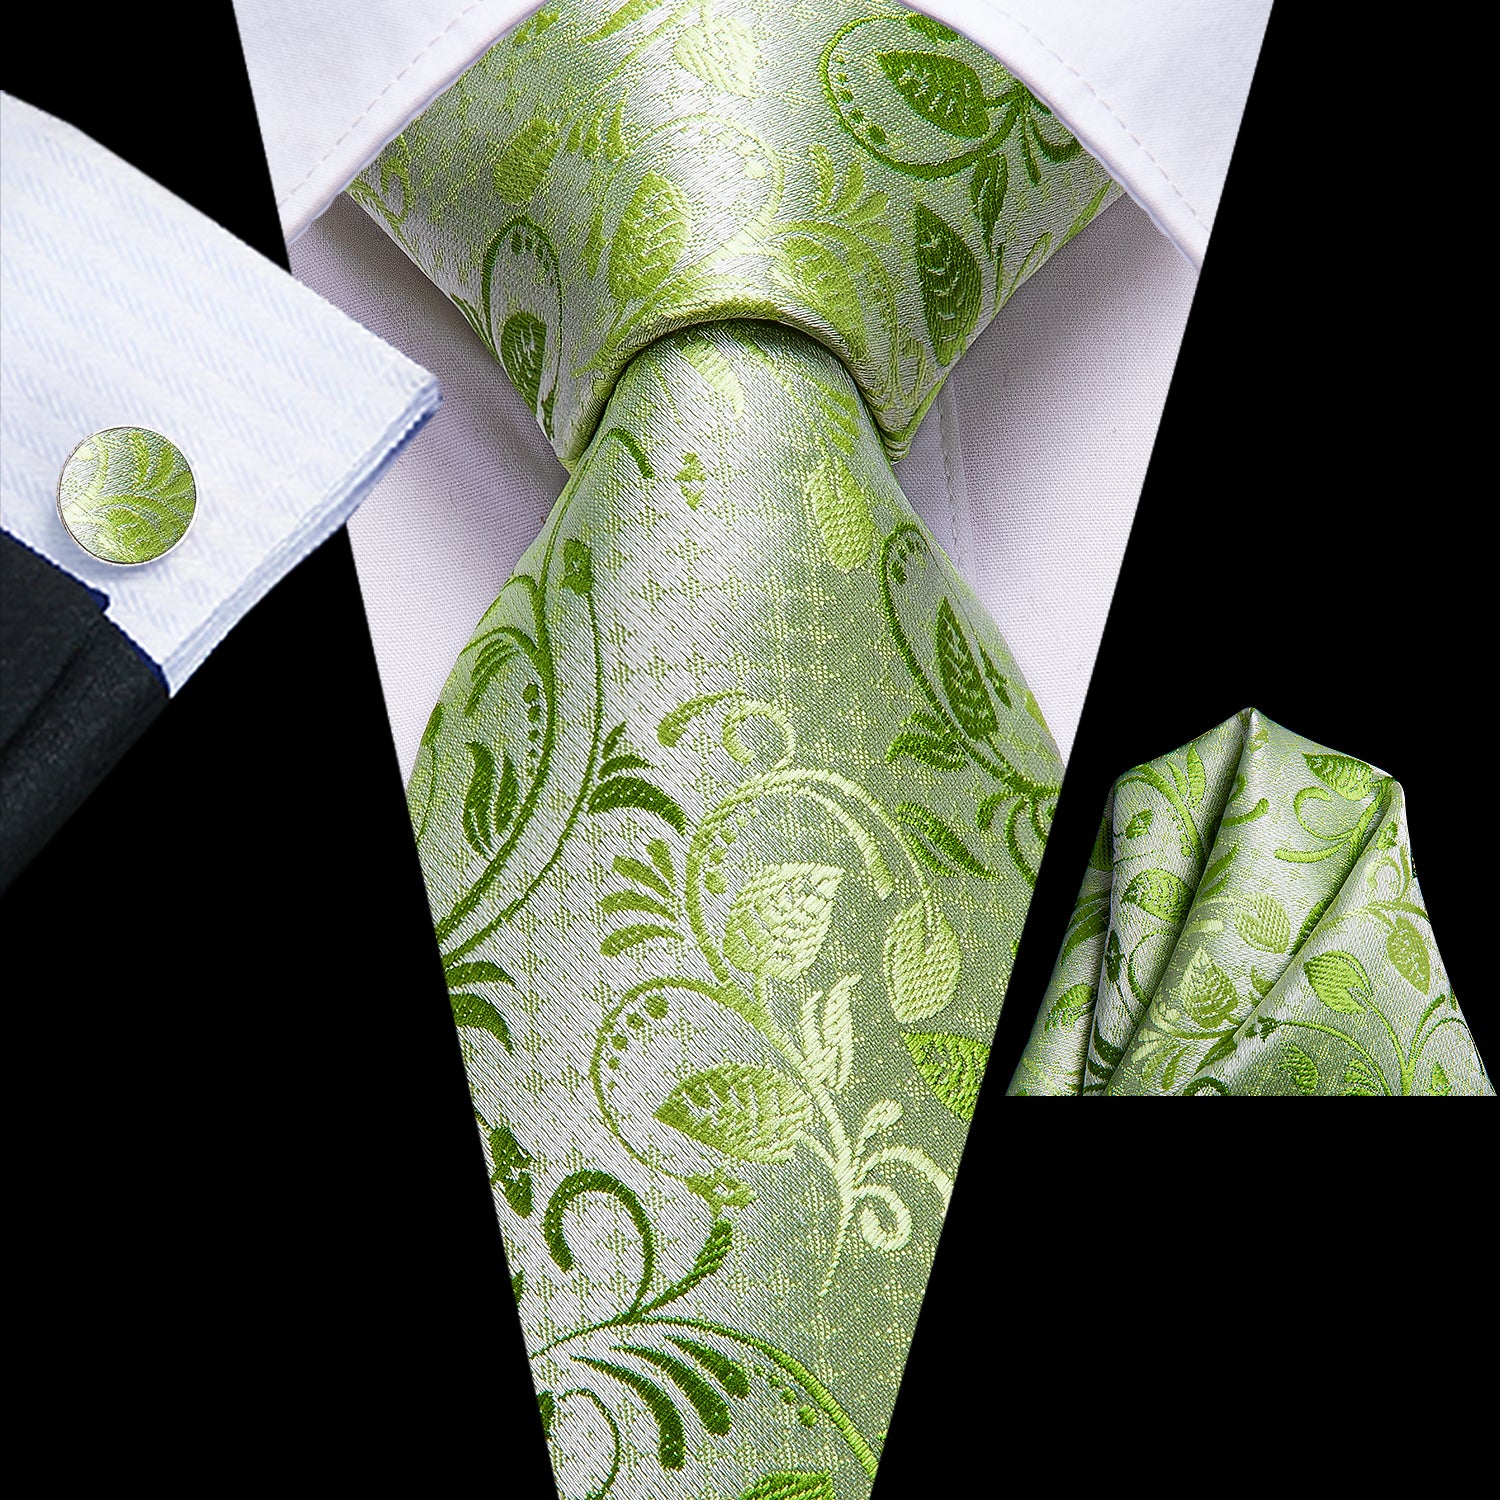 Fluorescent Green Floral Tie Pocket Square Cufflinks Set